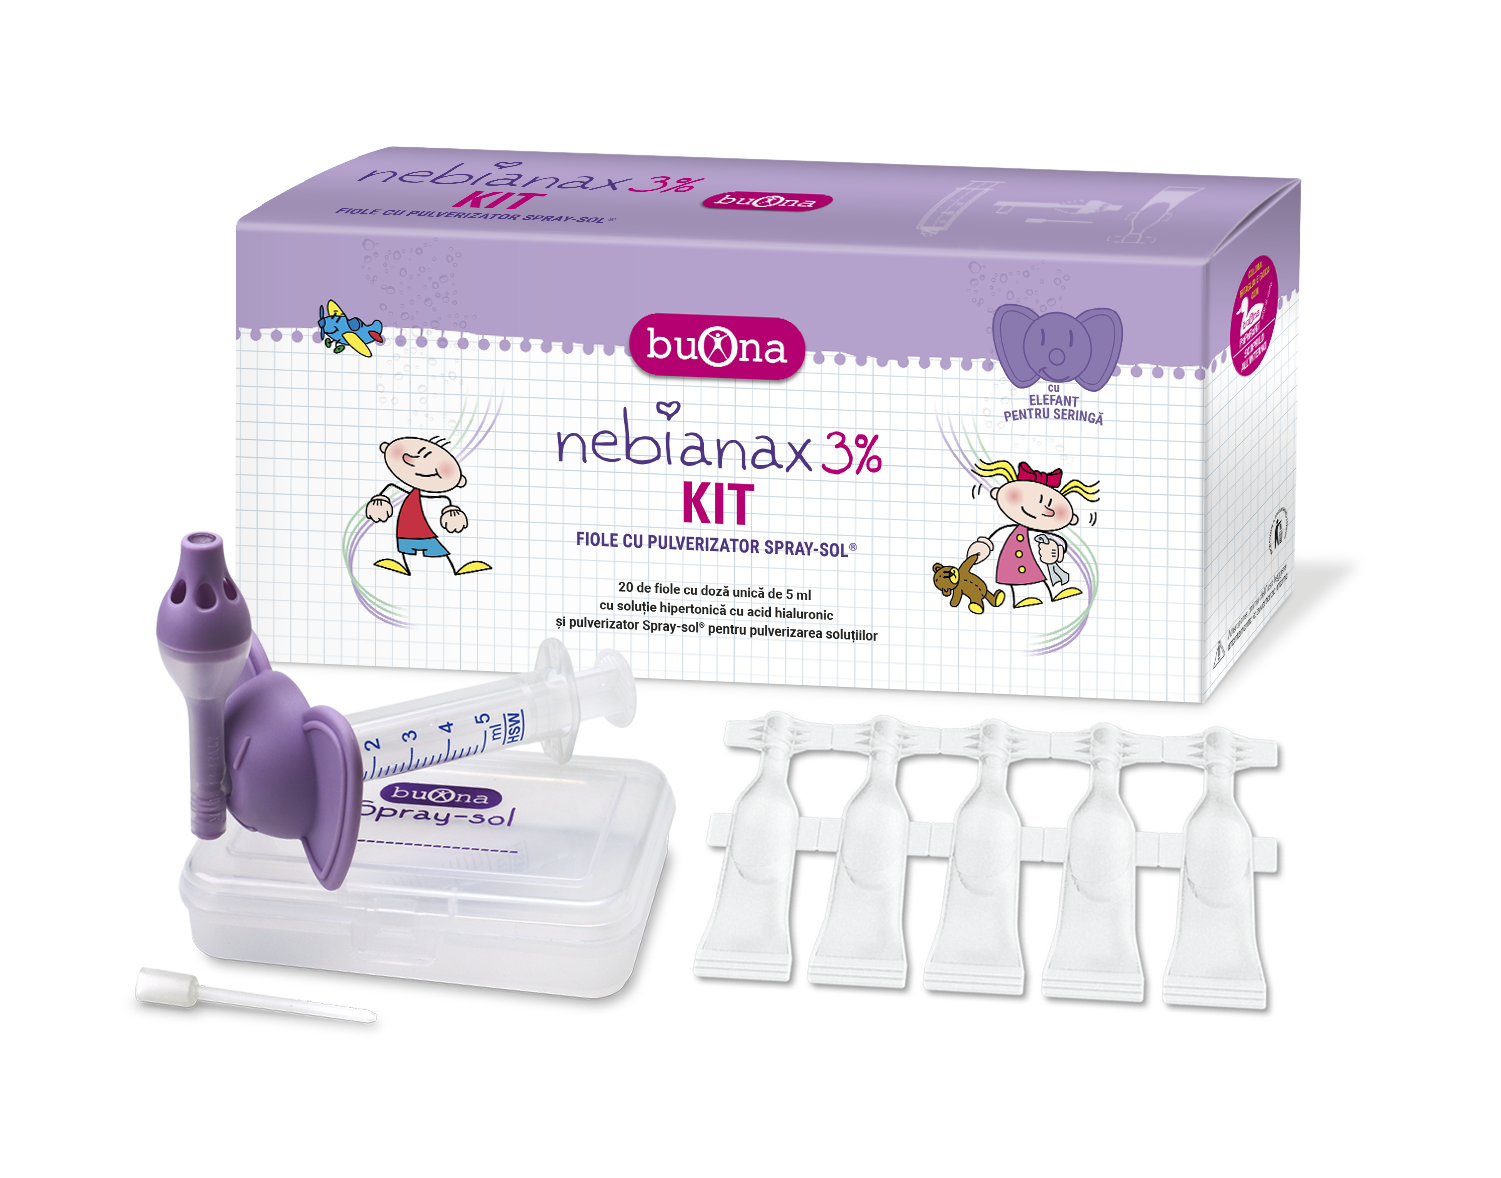 Nebianax 3% KIT Fiole cu pulverizator Spray-Sol, 20 fiole , 5ml